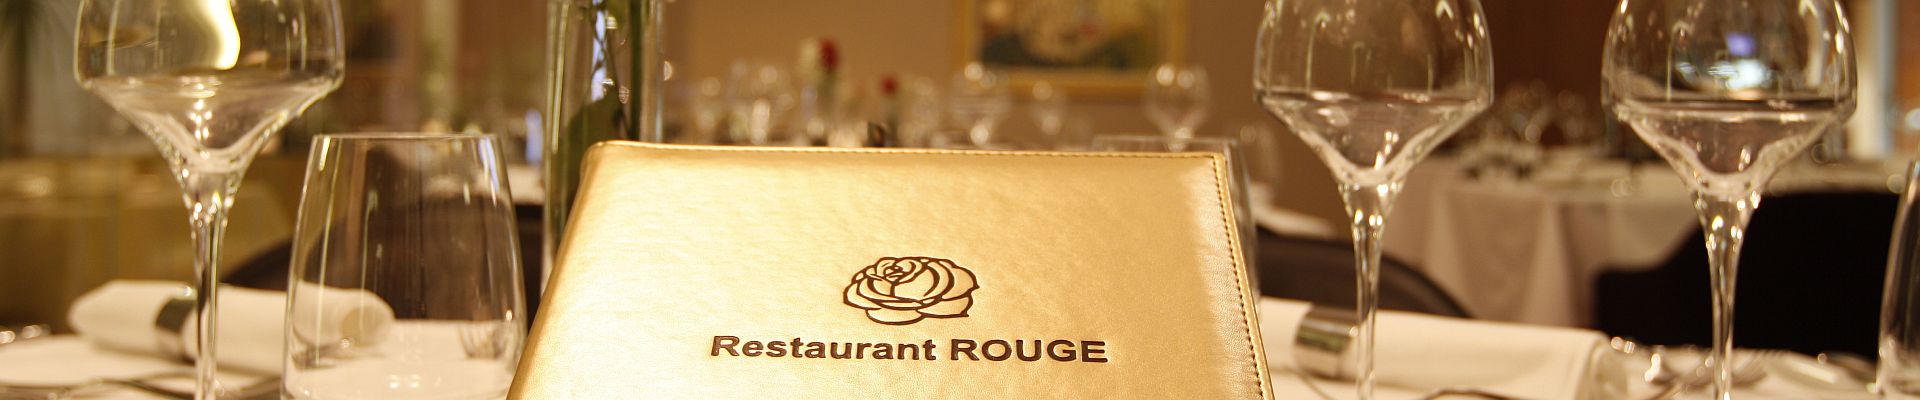 Restaurant Rouge Hotel MIKADO Nitra